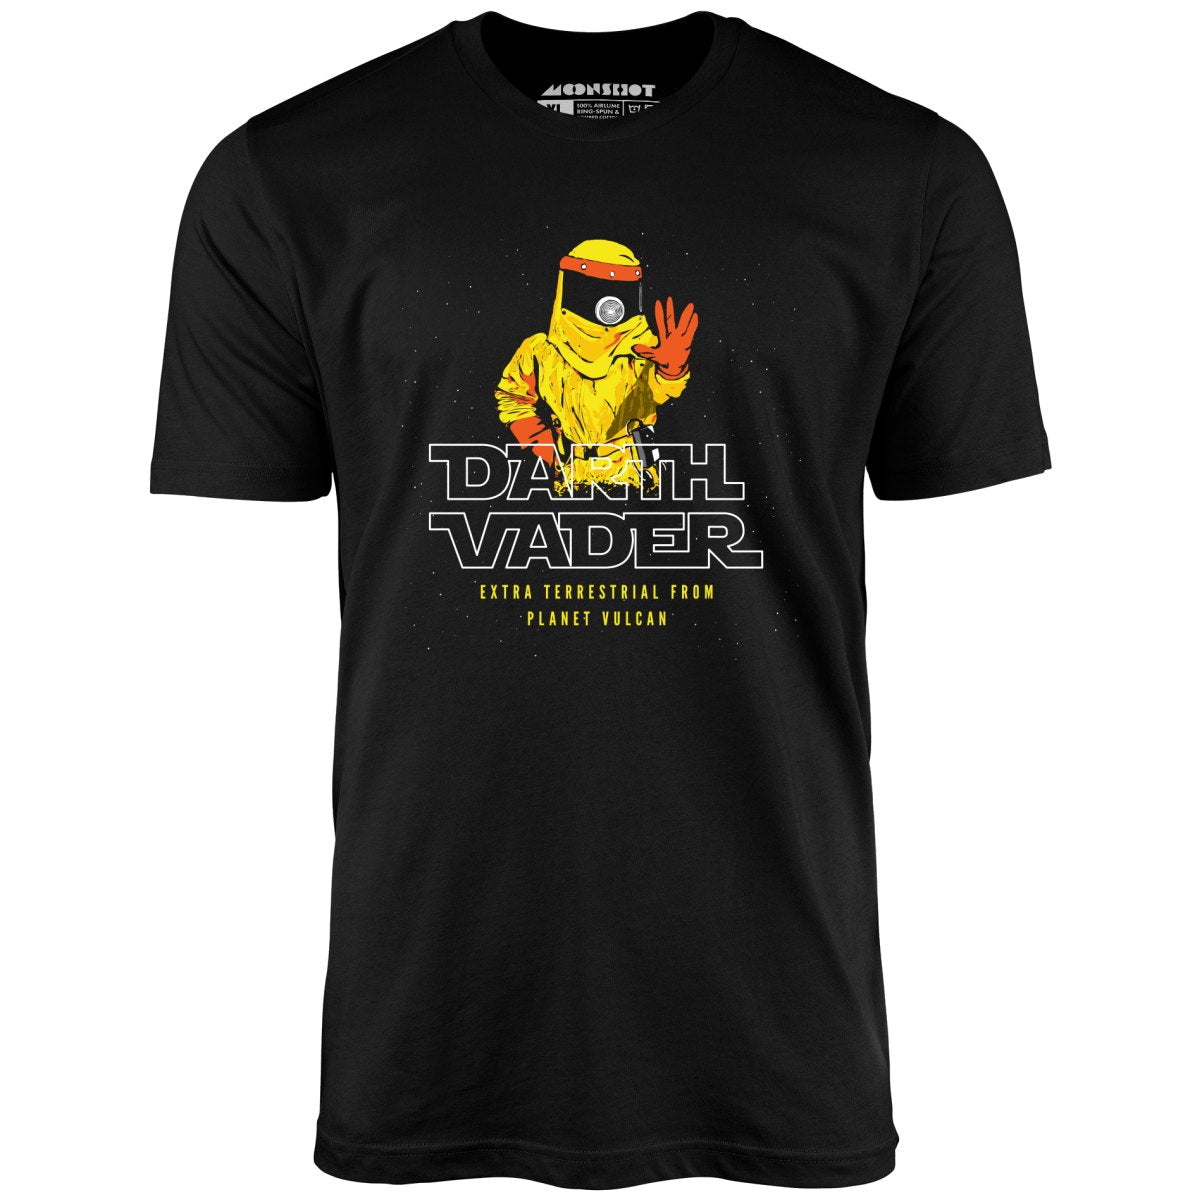 Darth Vader Planet Vulcan Parody - Unisex T-Shirt